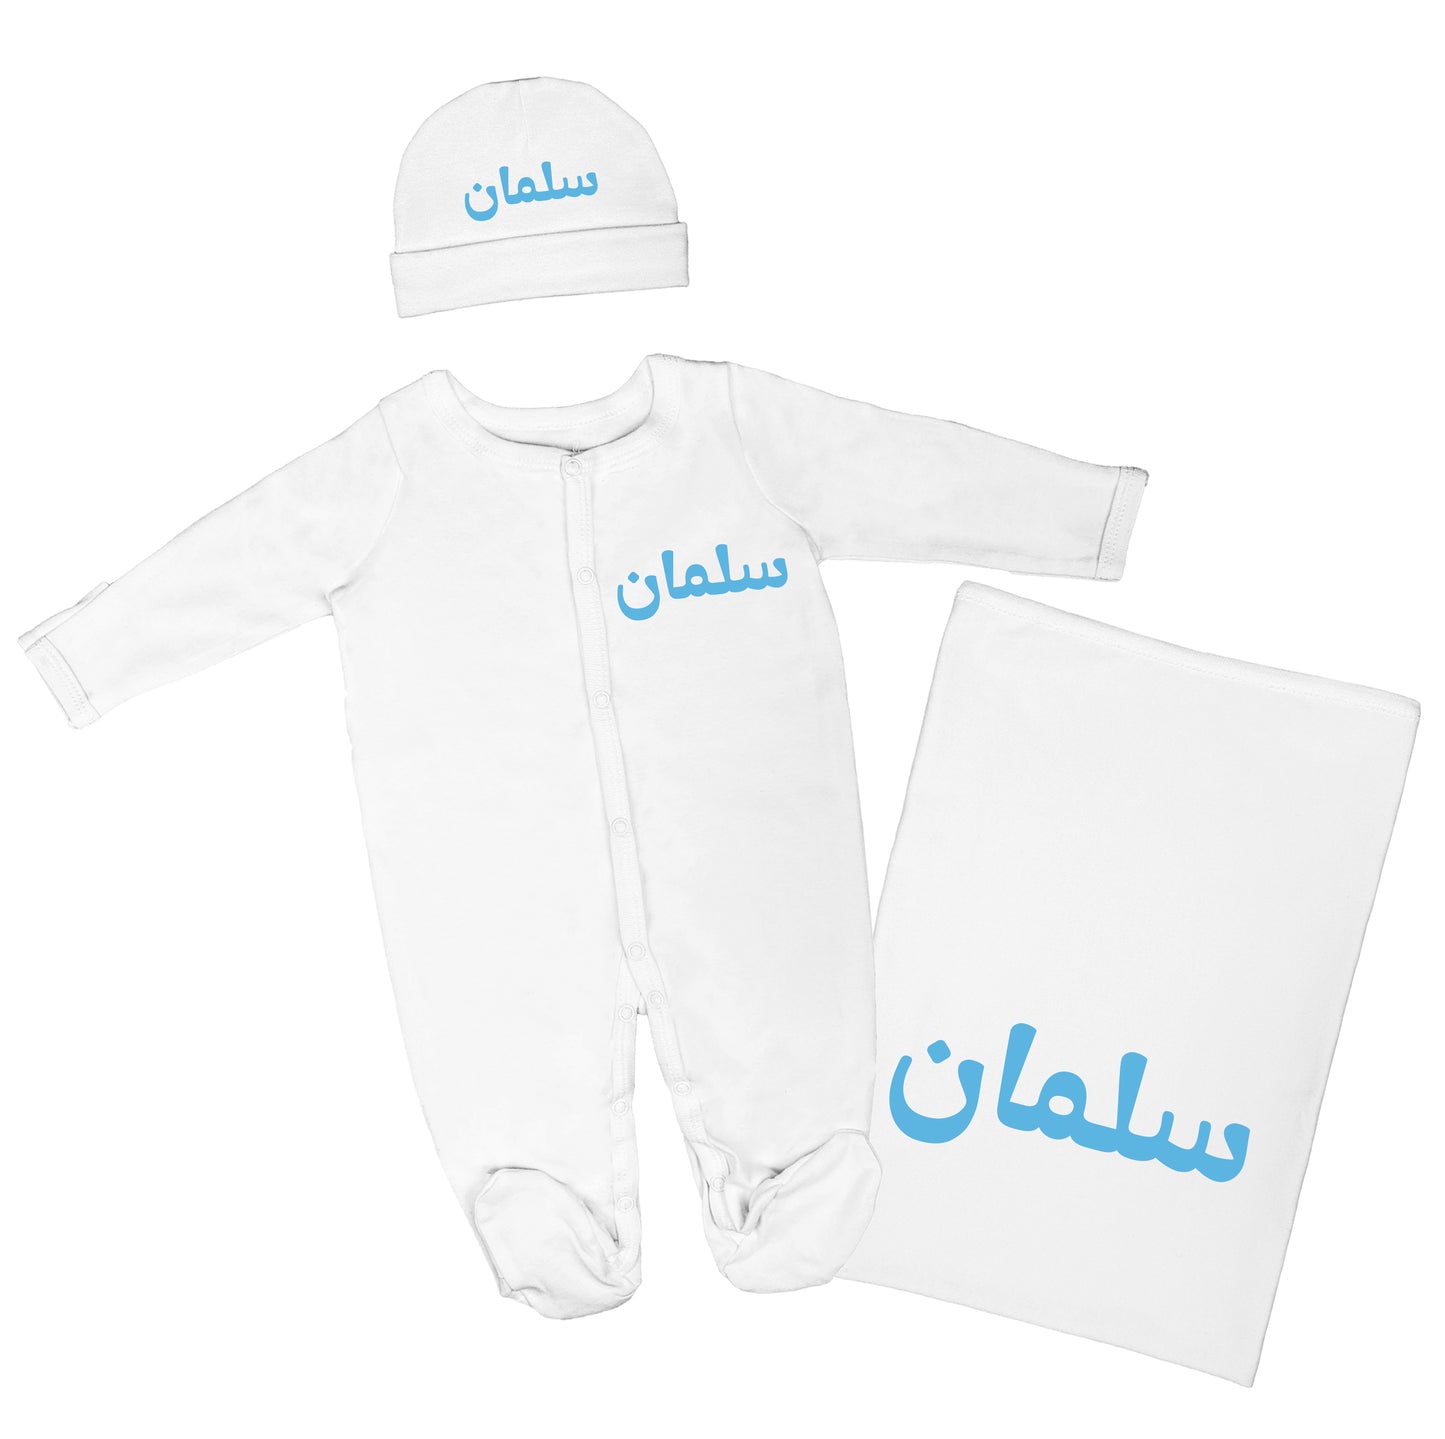 Personalized Baby Clothing Set (Blanket, Sleepsuit, Beanie) - Arabic Name